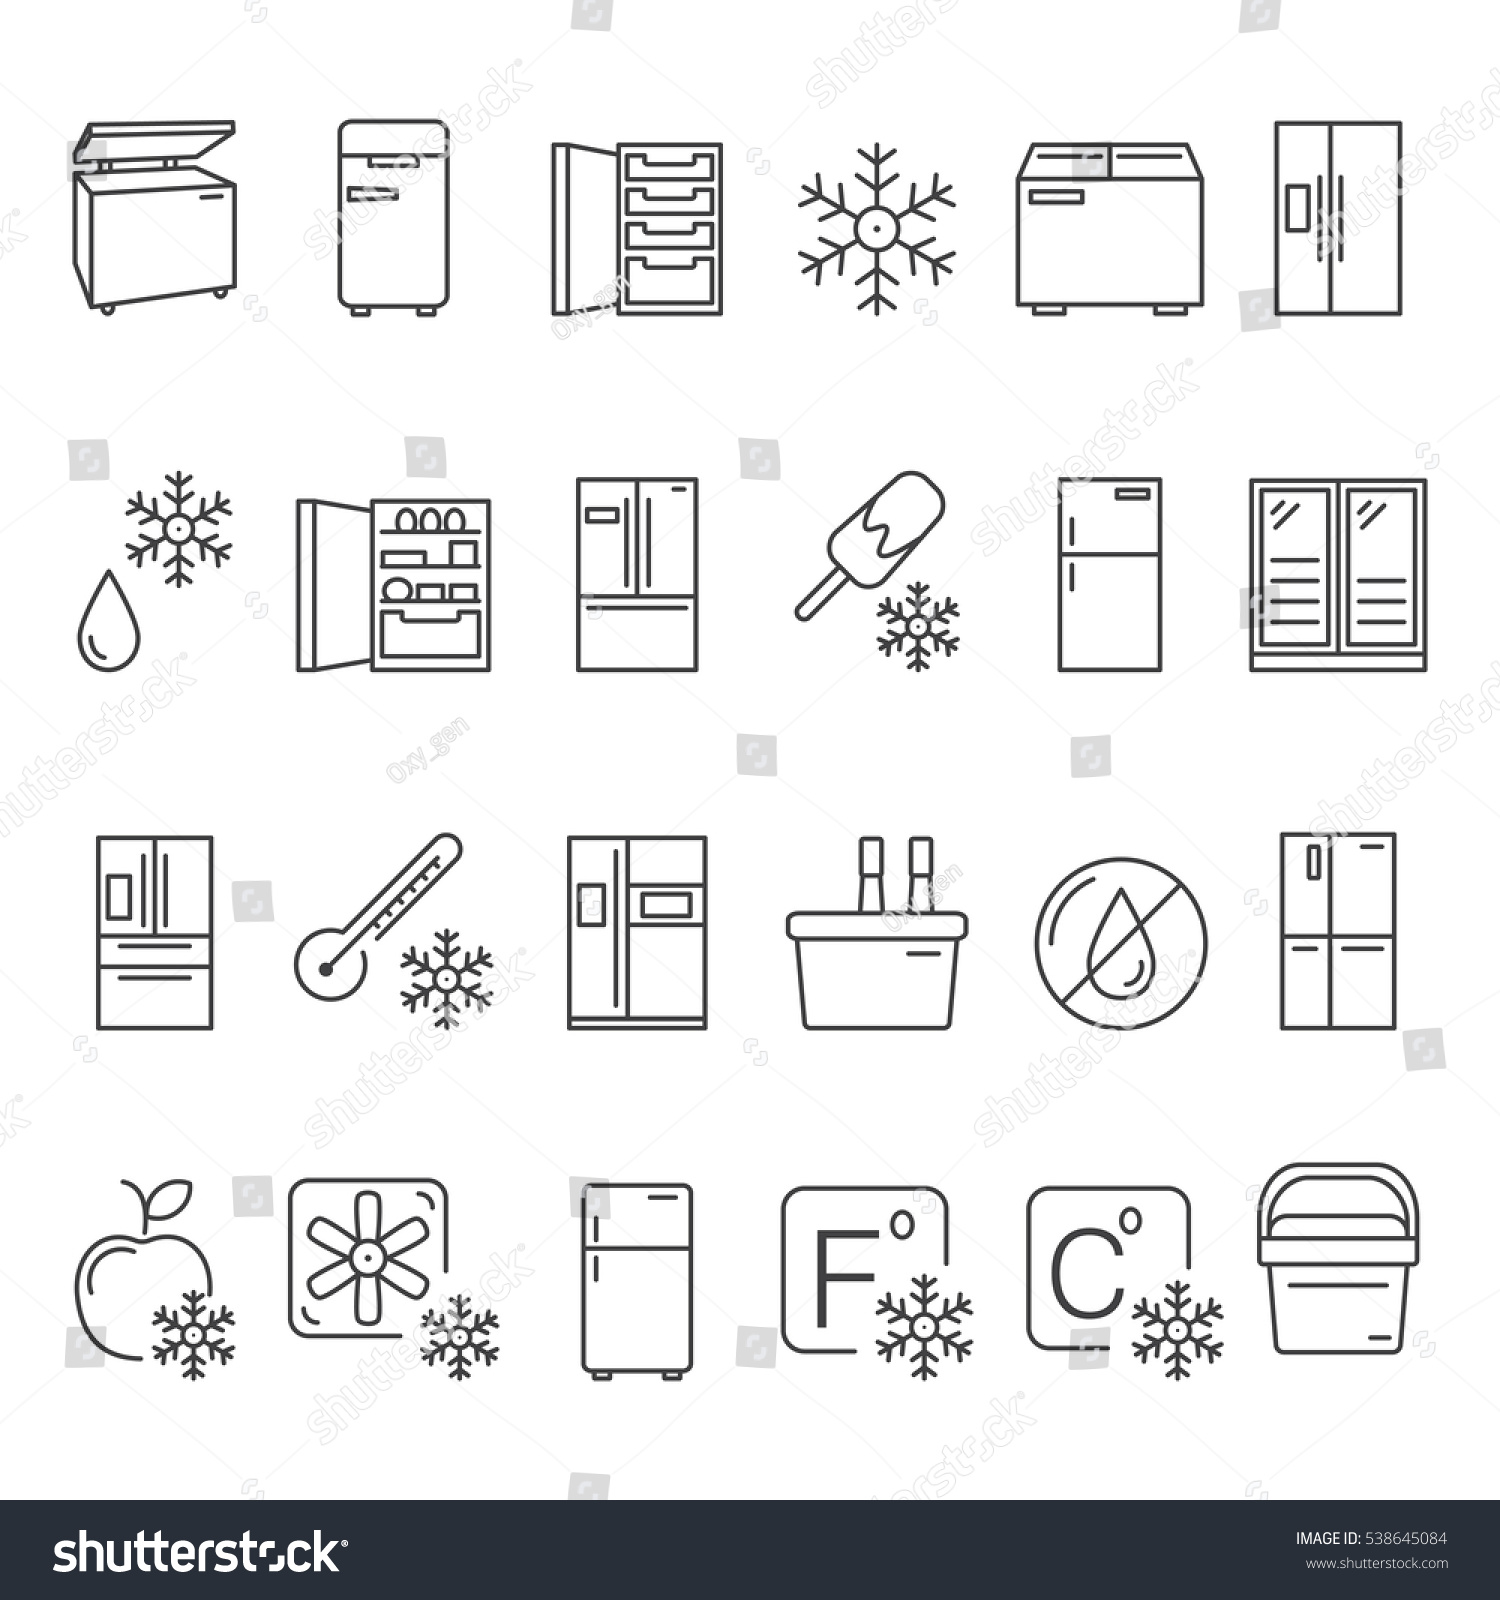 SVG of Outline Fridge Icons, Signs and Symbols Set. Kitchen Appliances,  Equipment, Freeze Refrigerator Line Vector Illustration. With Freezer, Portable Fridge, etc. svg